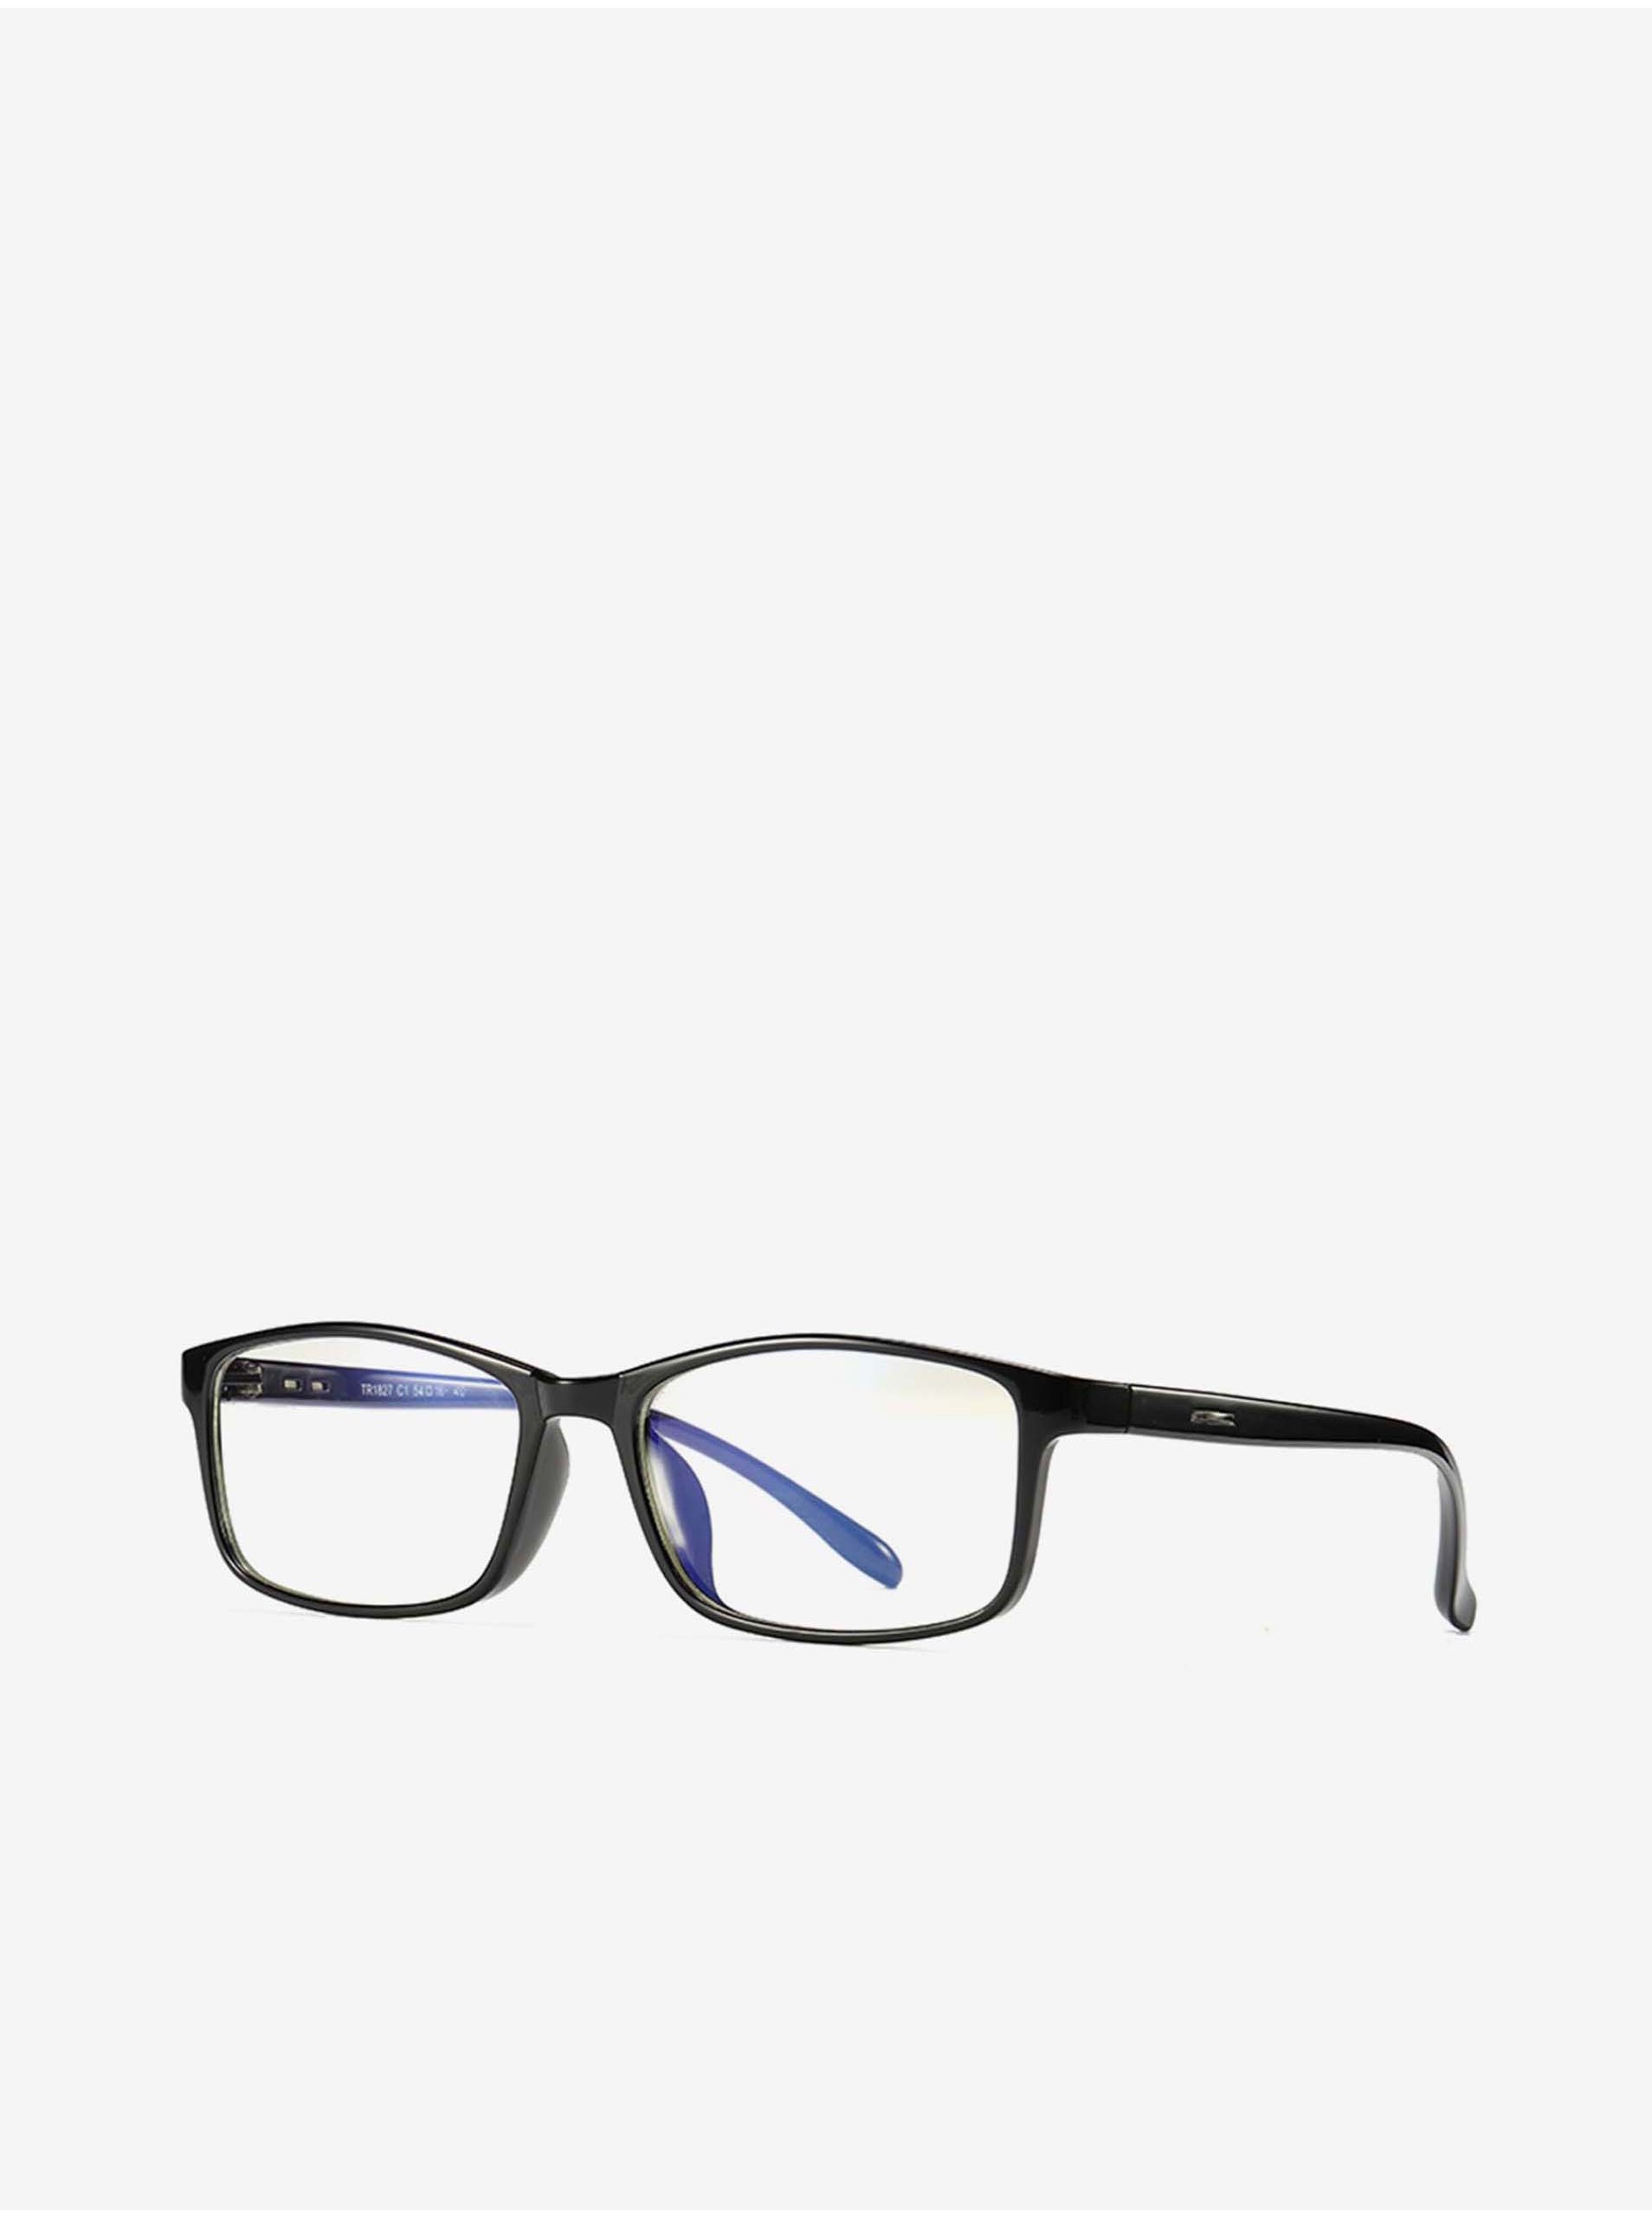 E-shop VeyRey Počítačové brýle hranaté Rafael černé